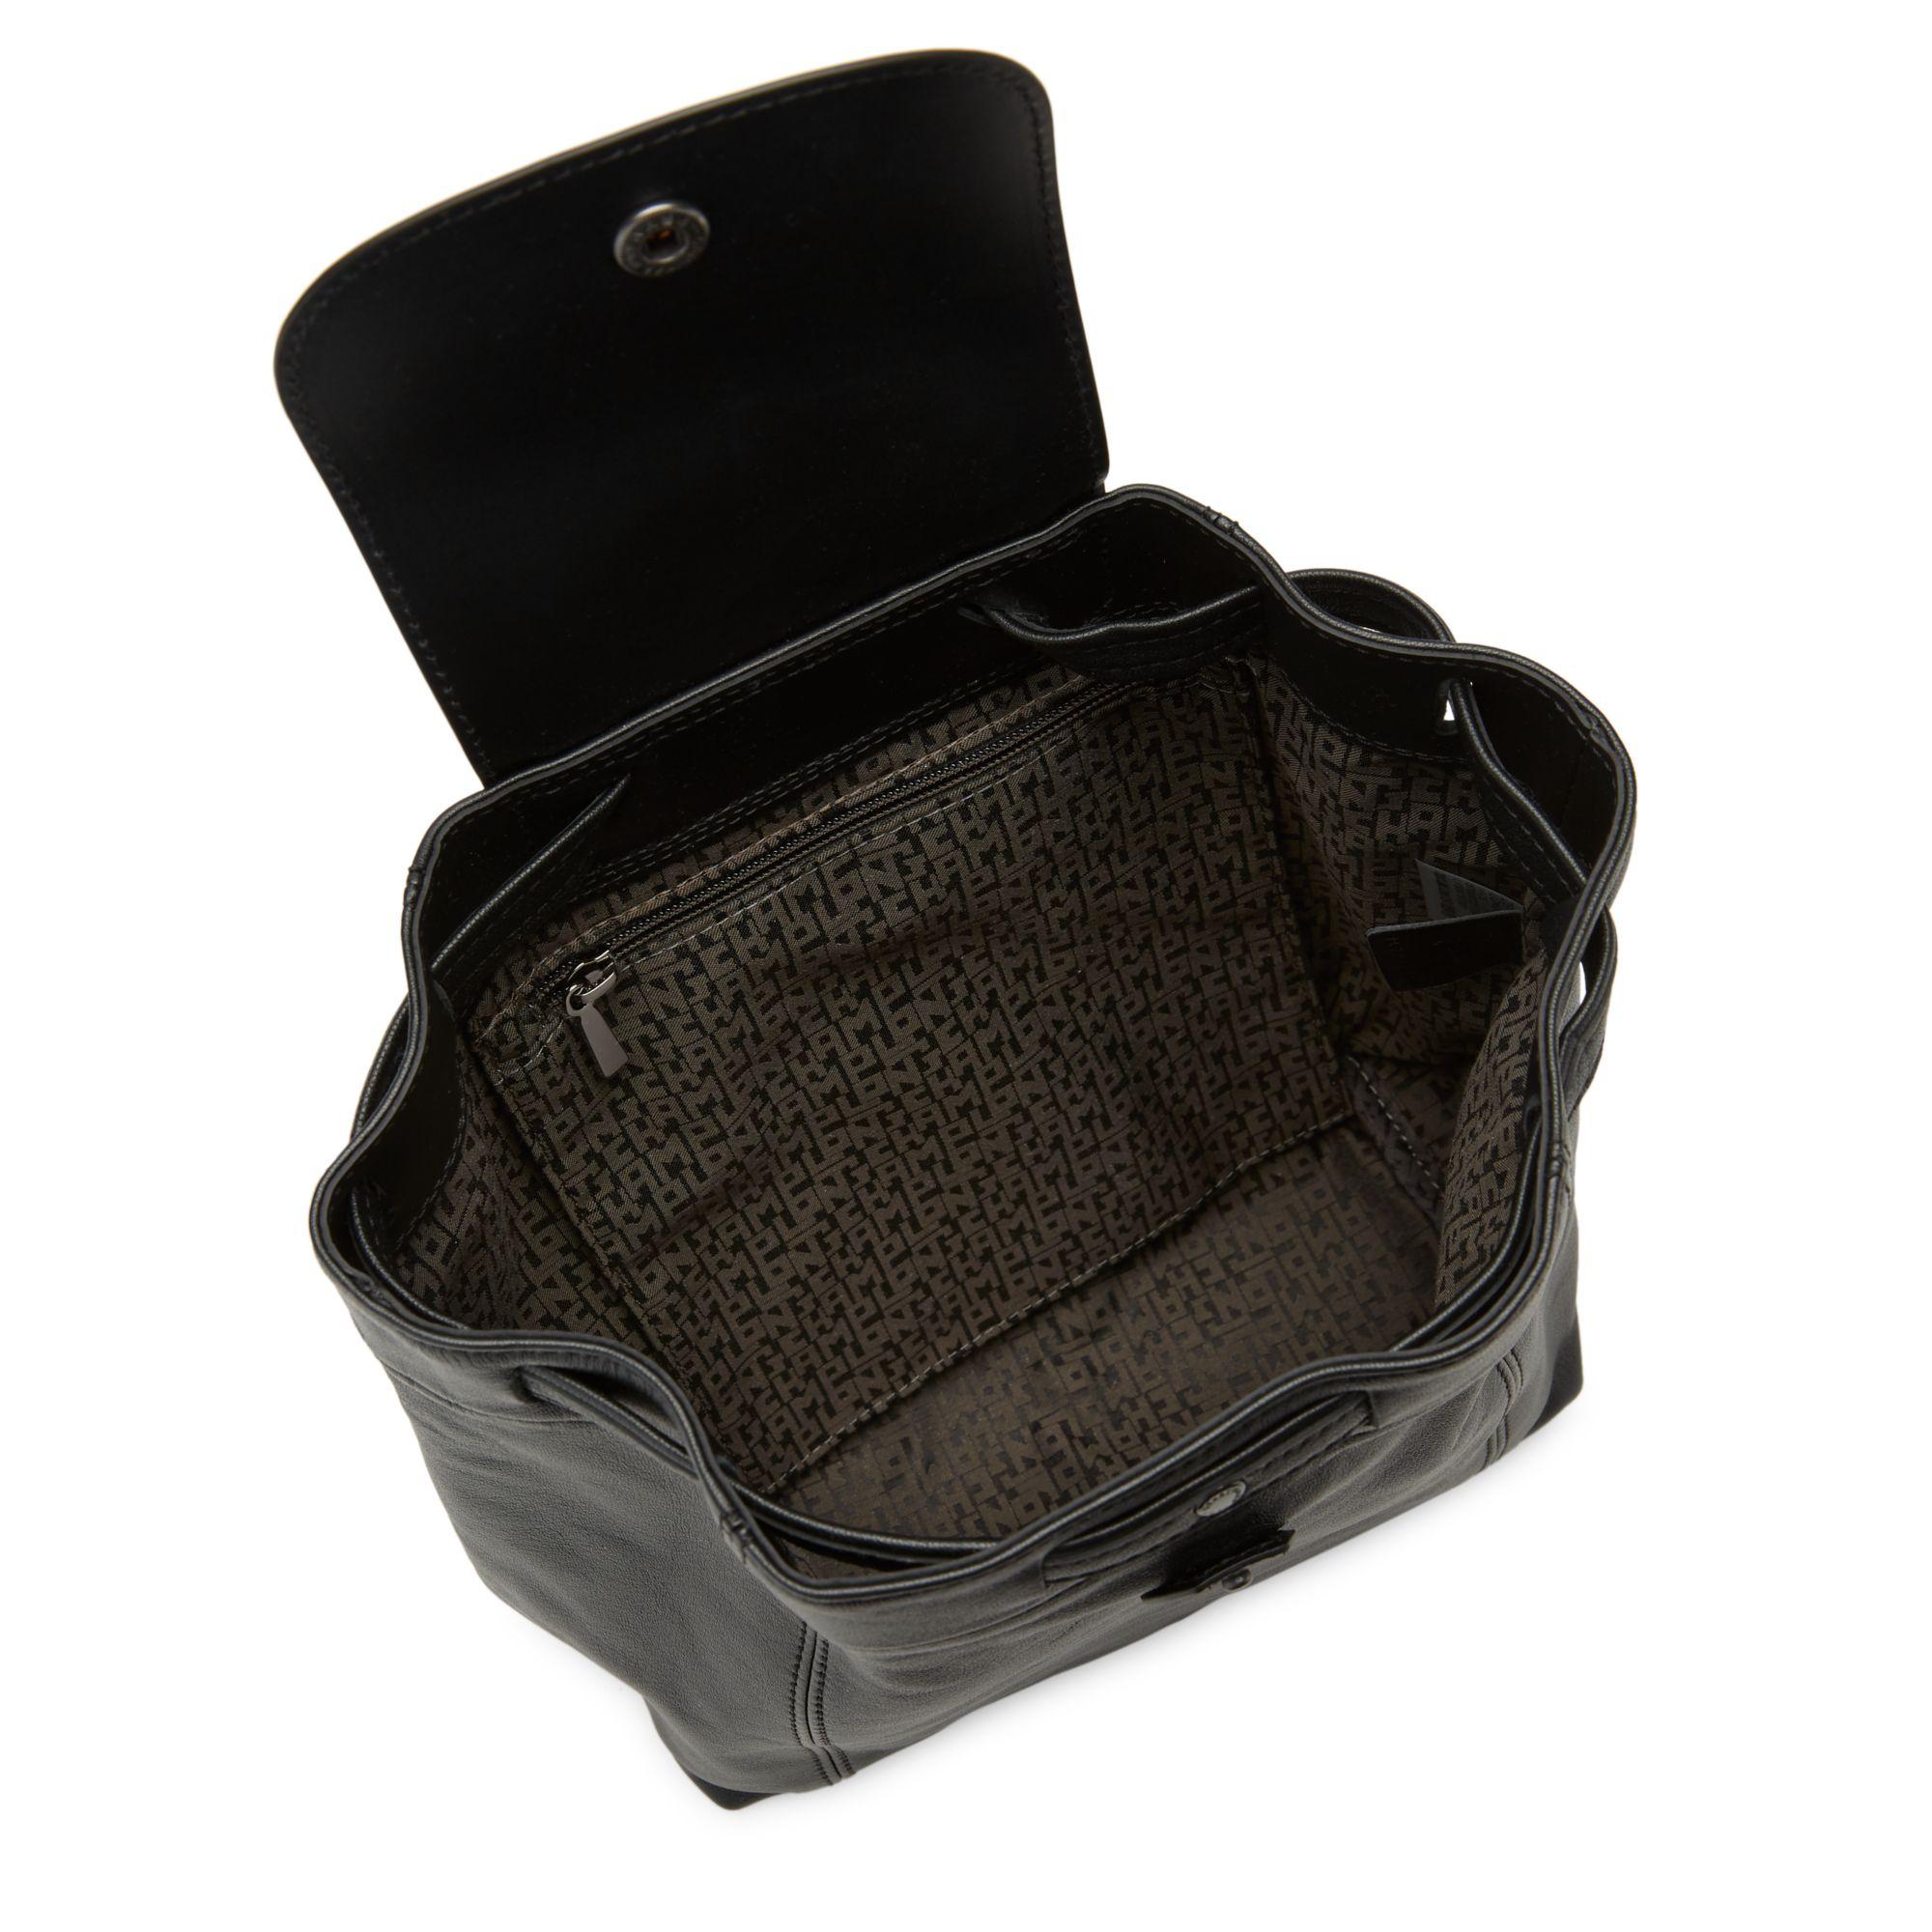 Longchamp Pliage Mini Size Backpack in Black